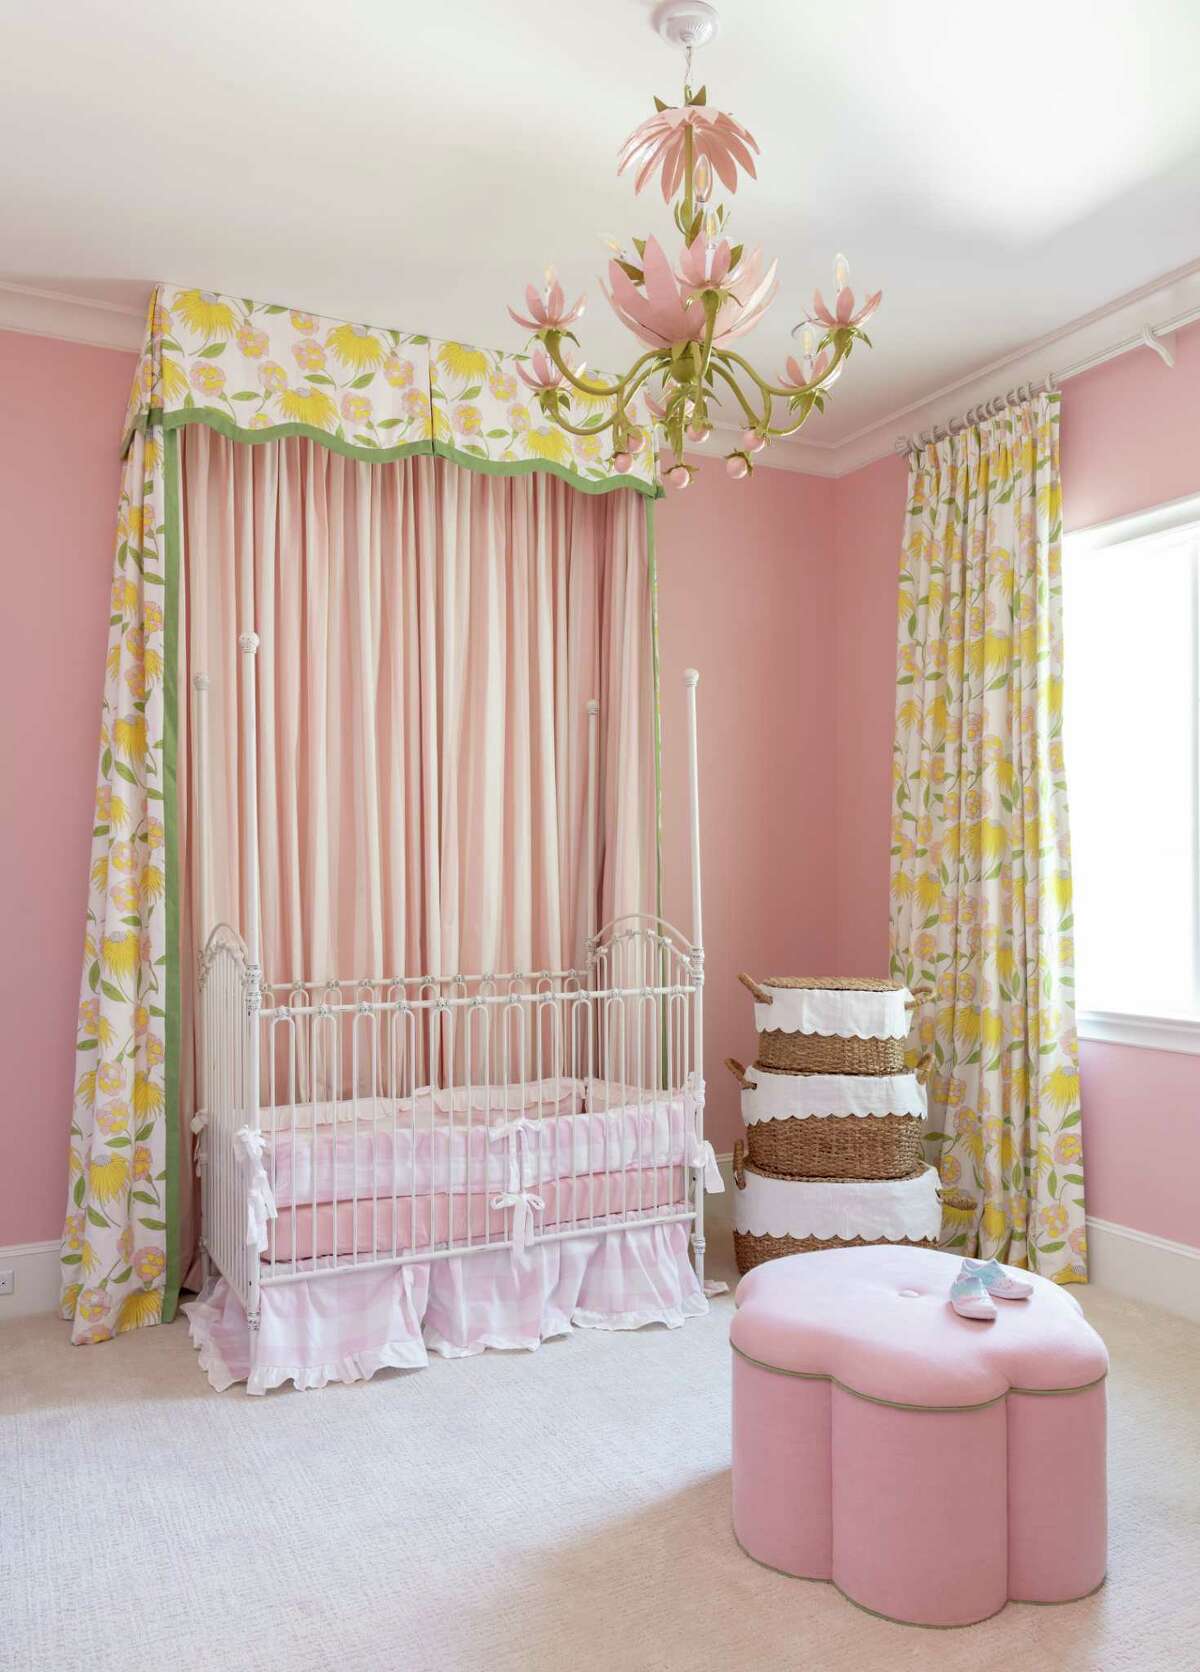 Houston interior designers create 'Barbie'-inspired pink rooms